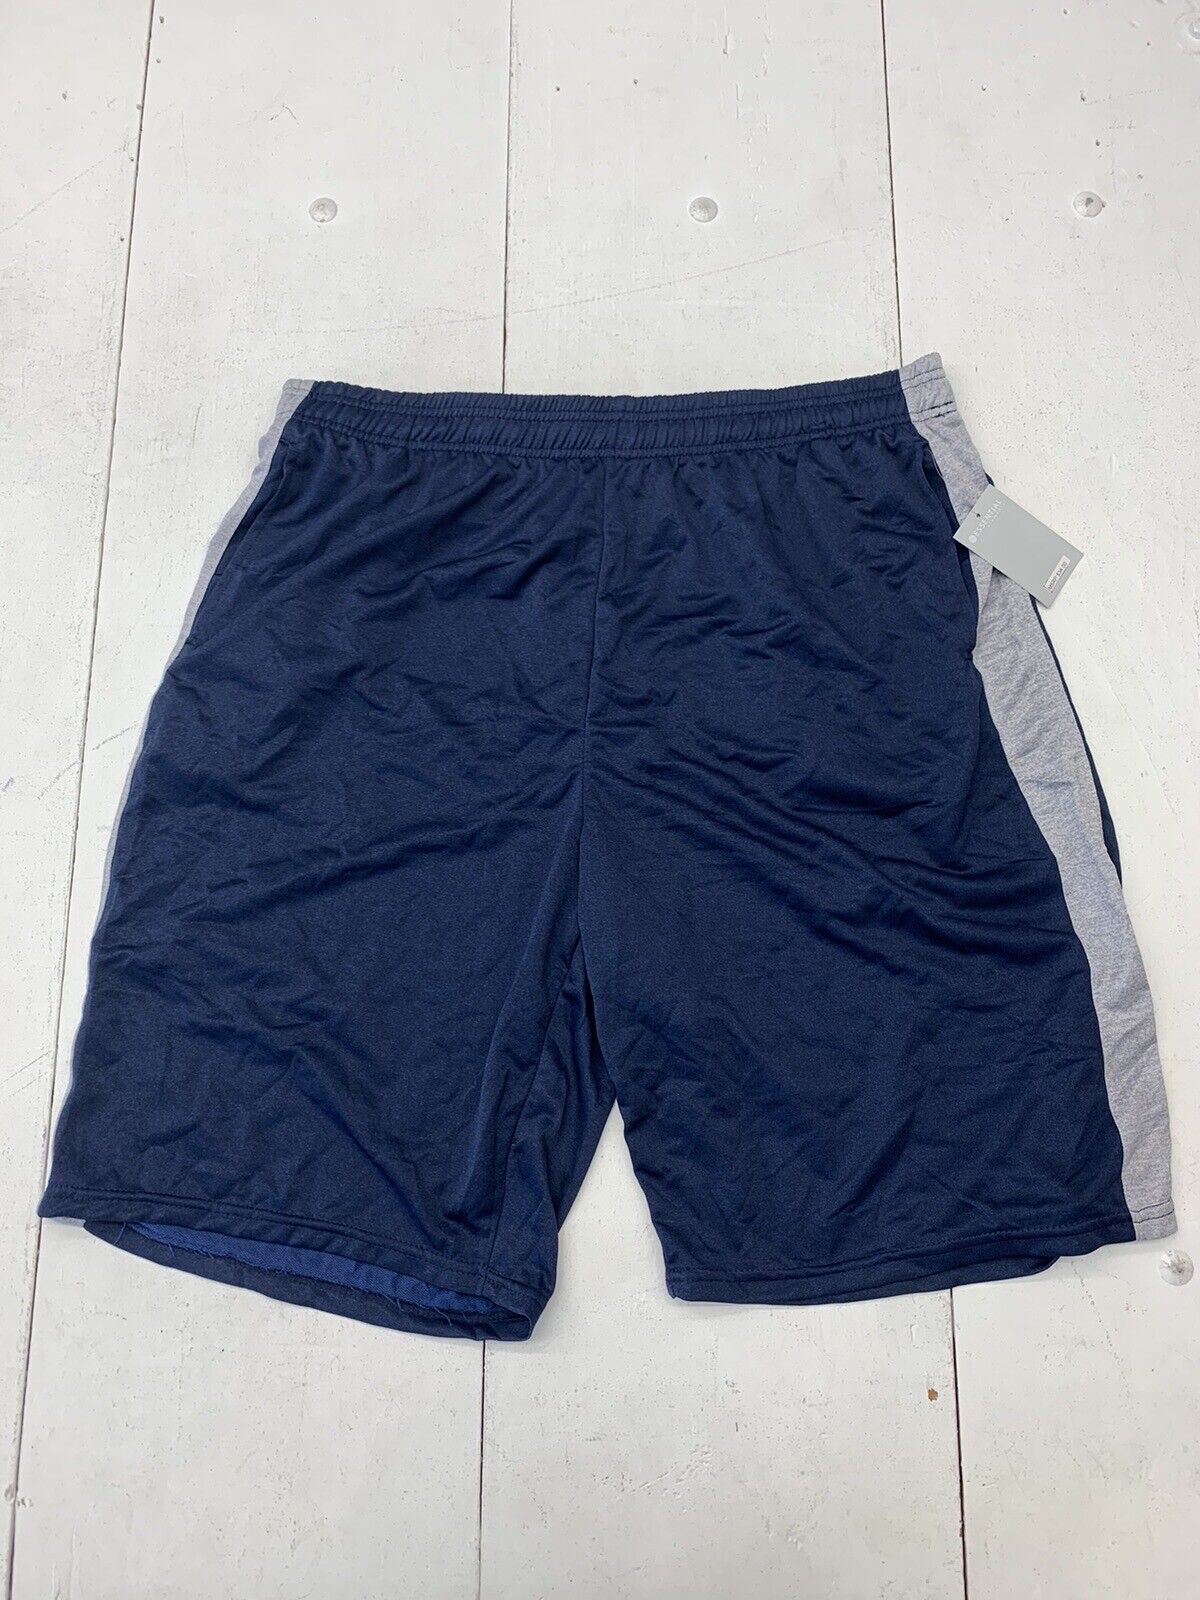 Essential Mens Dark Blue Athletic Drawstring Shorts Size 3XL